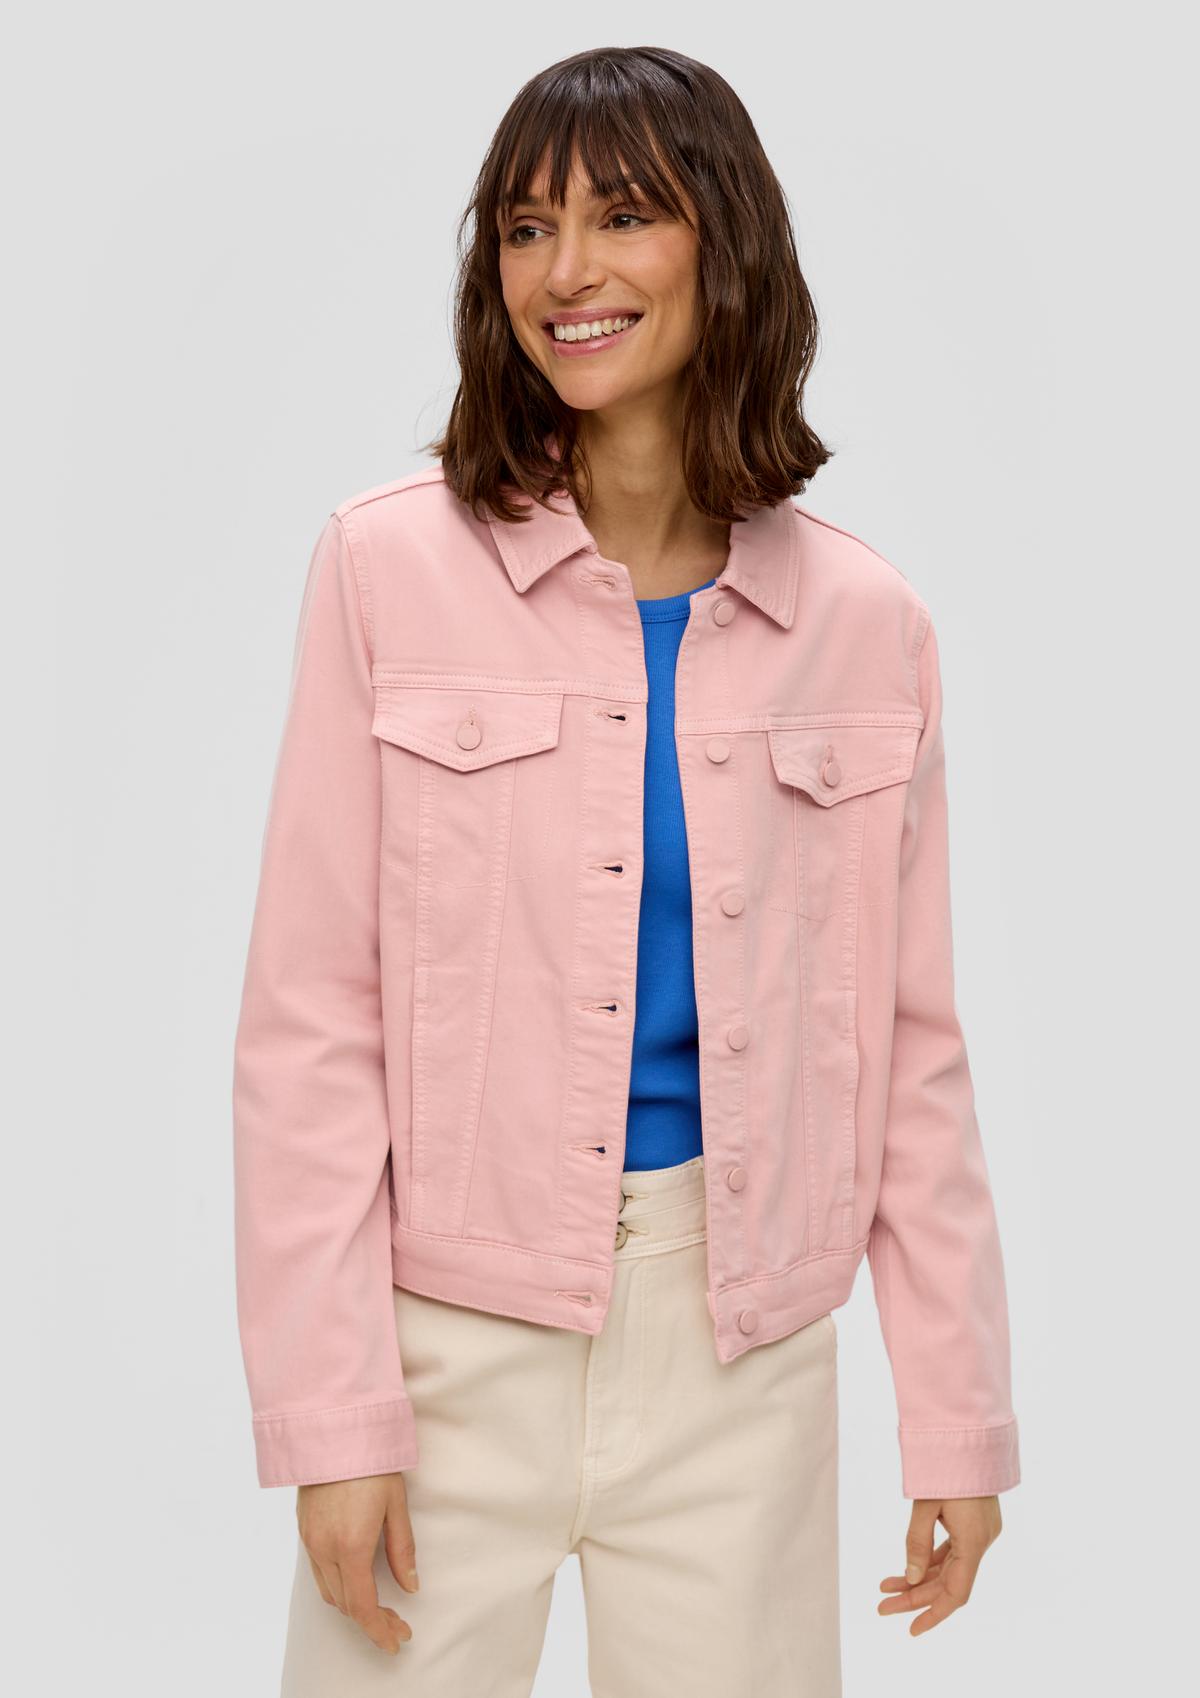 Cropped denim jacket with mock breast pockets